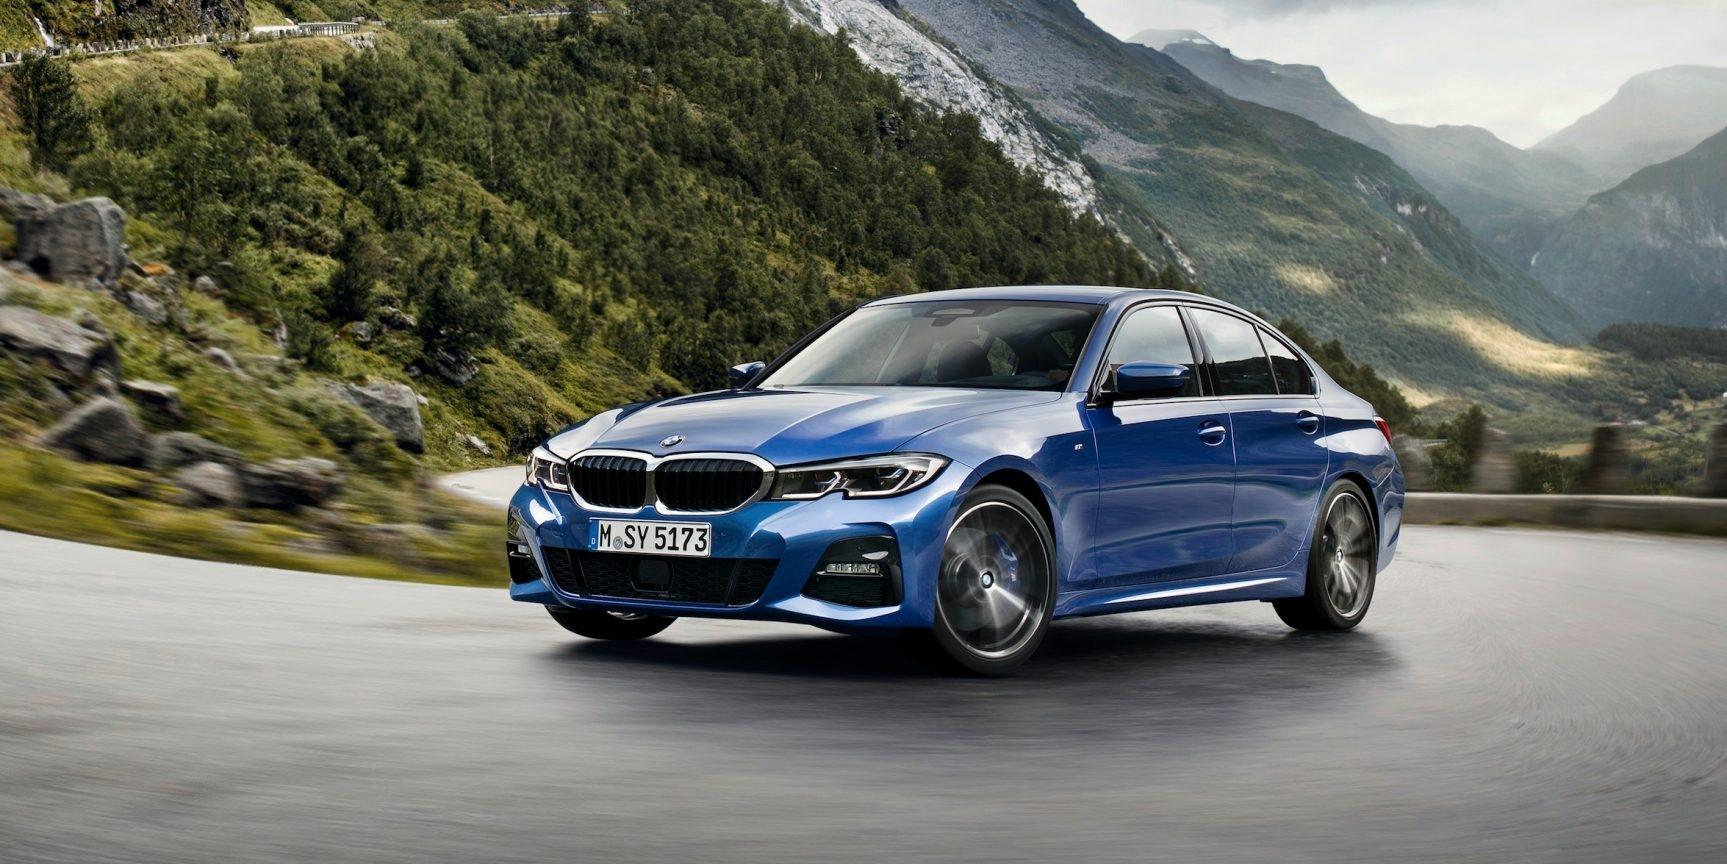 New 2019 BMW M3 Look High Resolution Wallpaper. New Autocar Blog